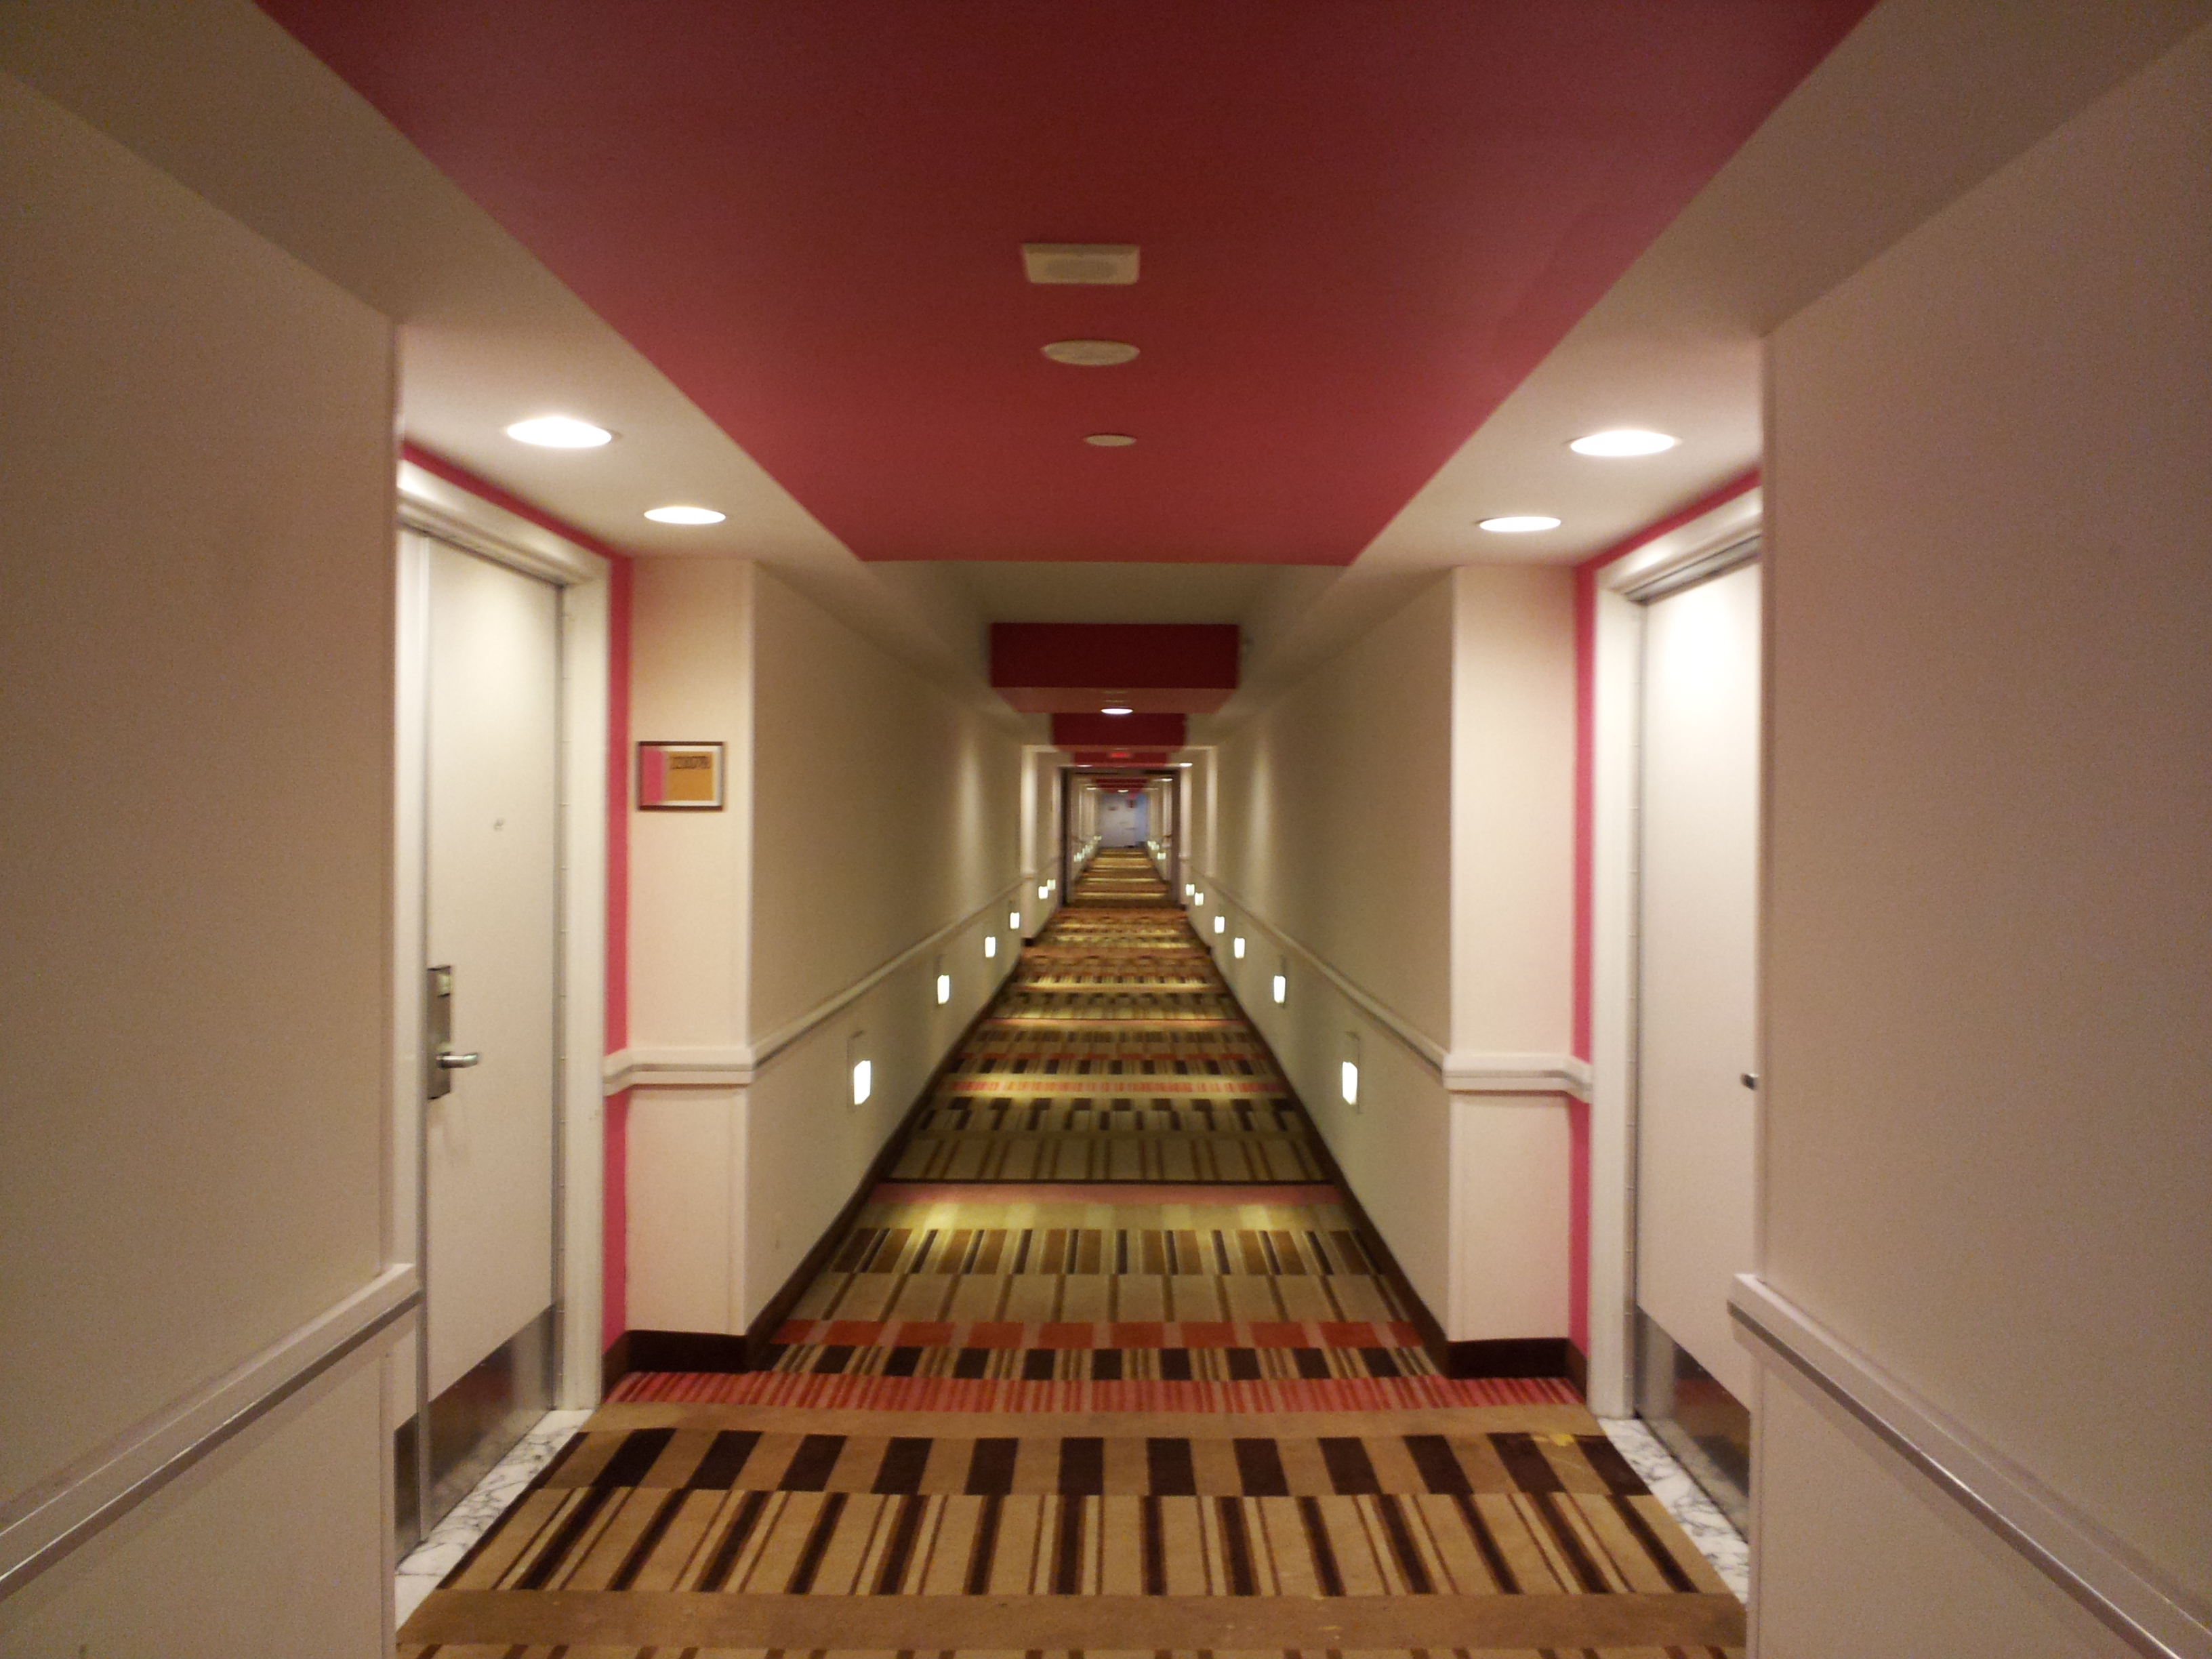 File:Hotel Hallway.jpeg - Wikimedia Commons